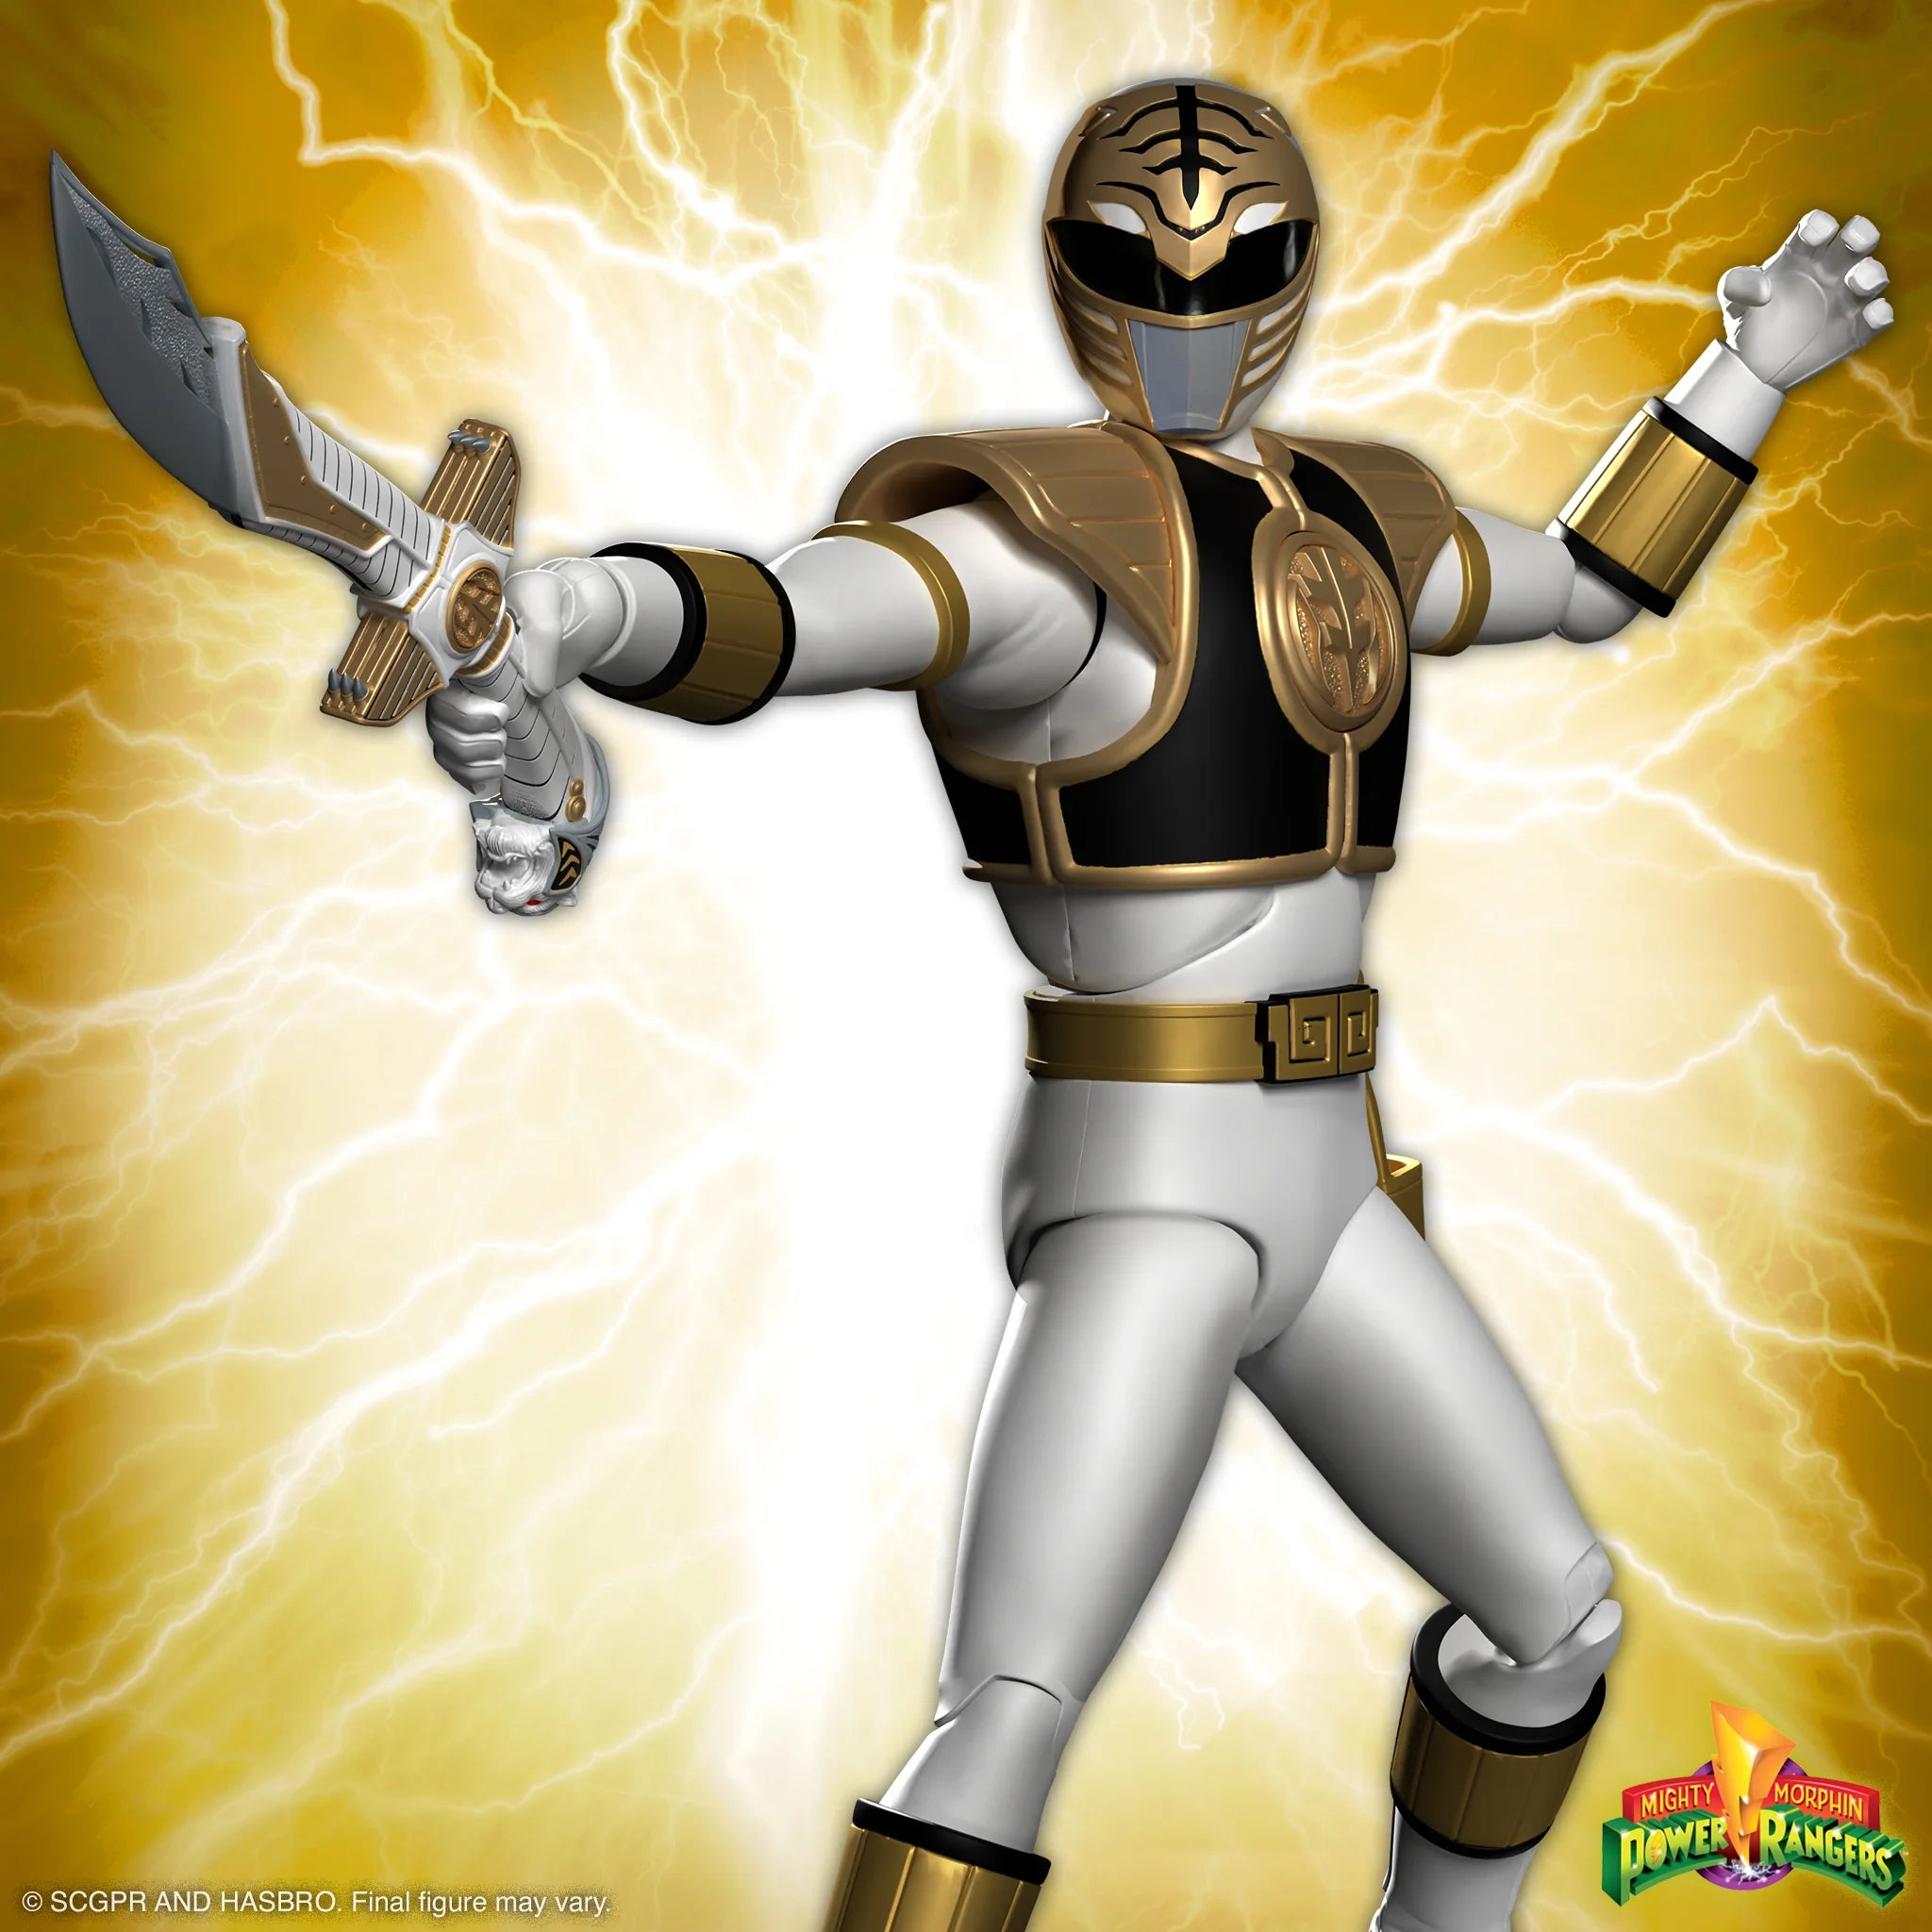 Super7 - Mighty Morphin Power Rangers ULTIMATES! - Wave 4 - White Ranger